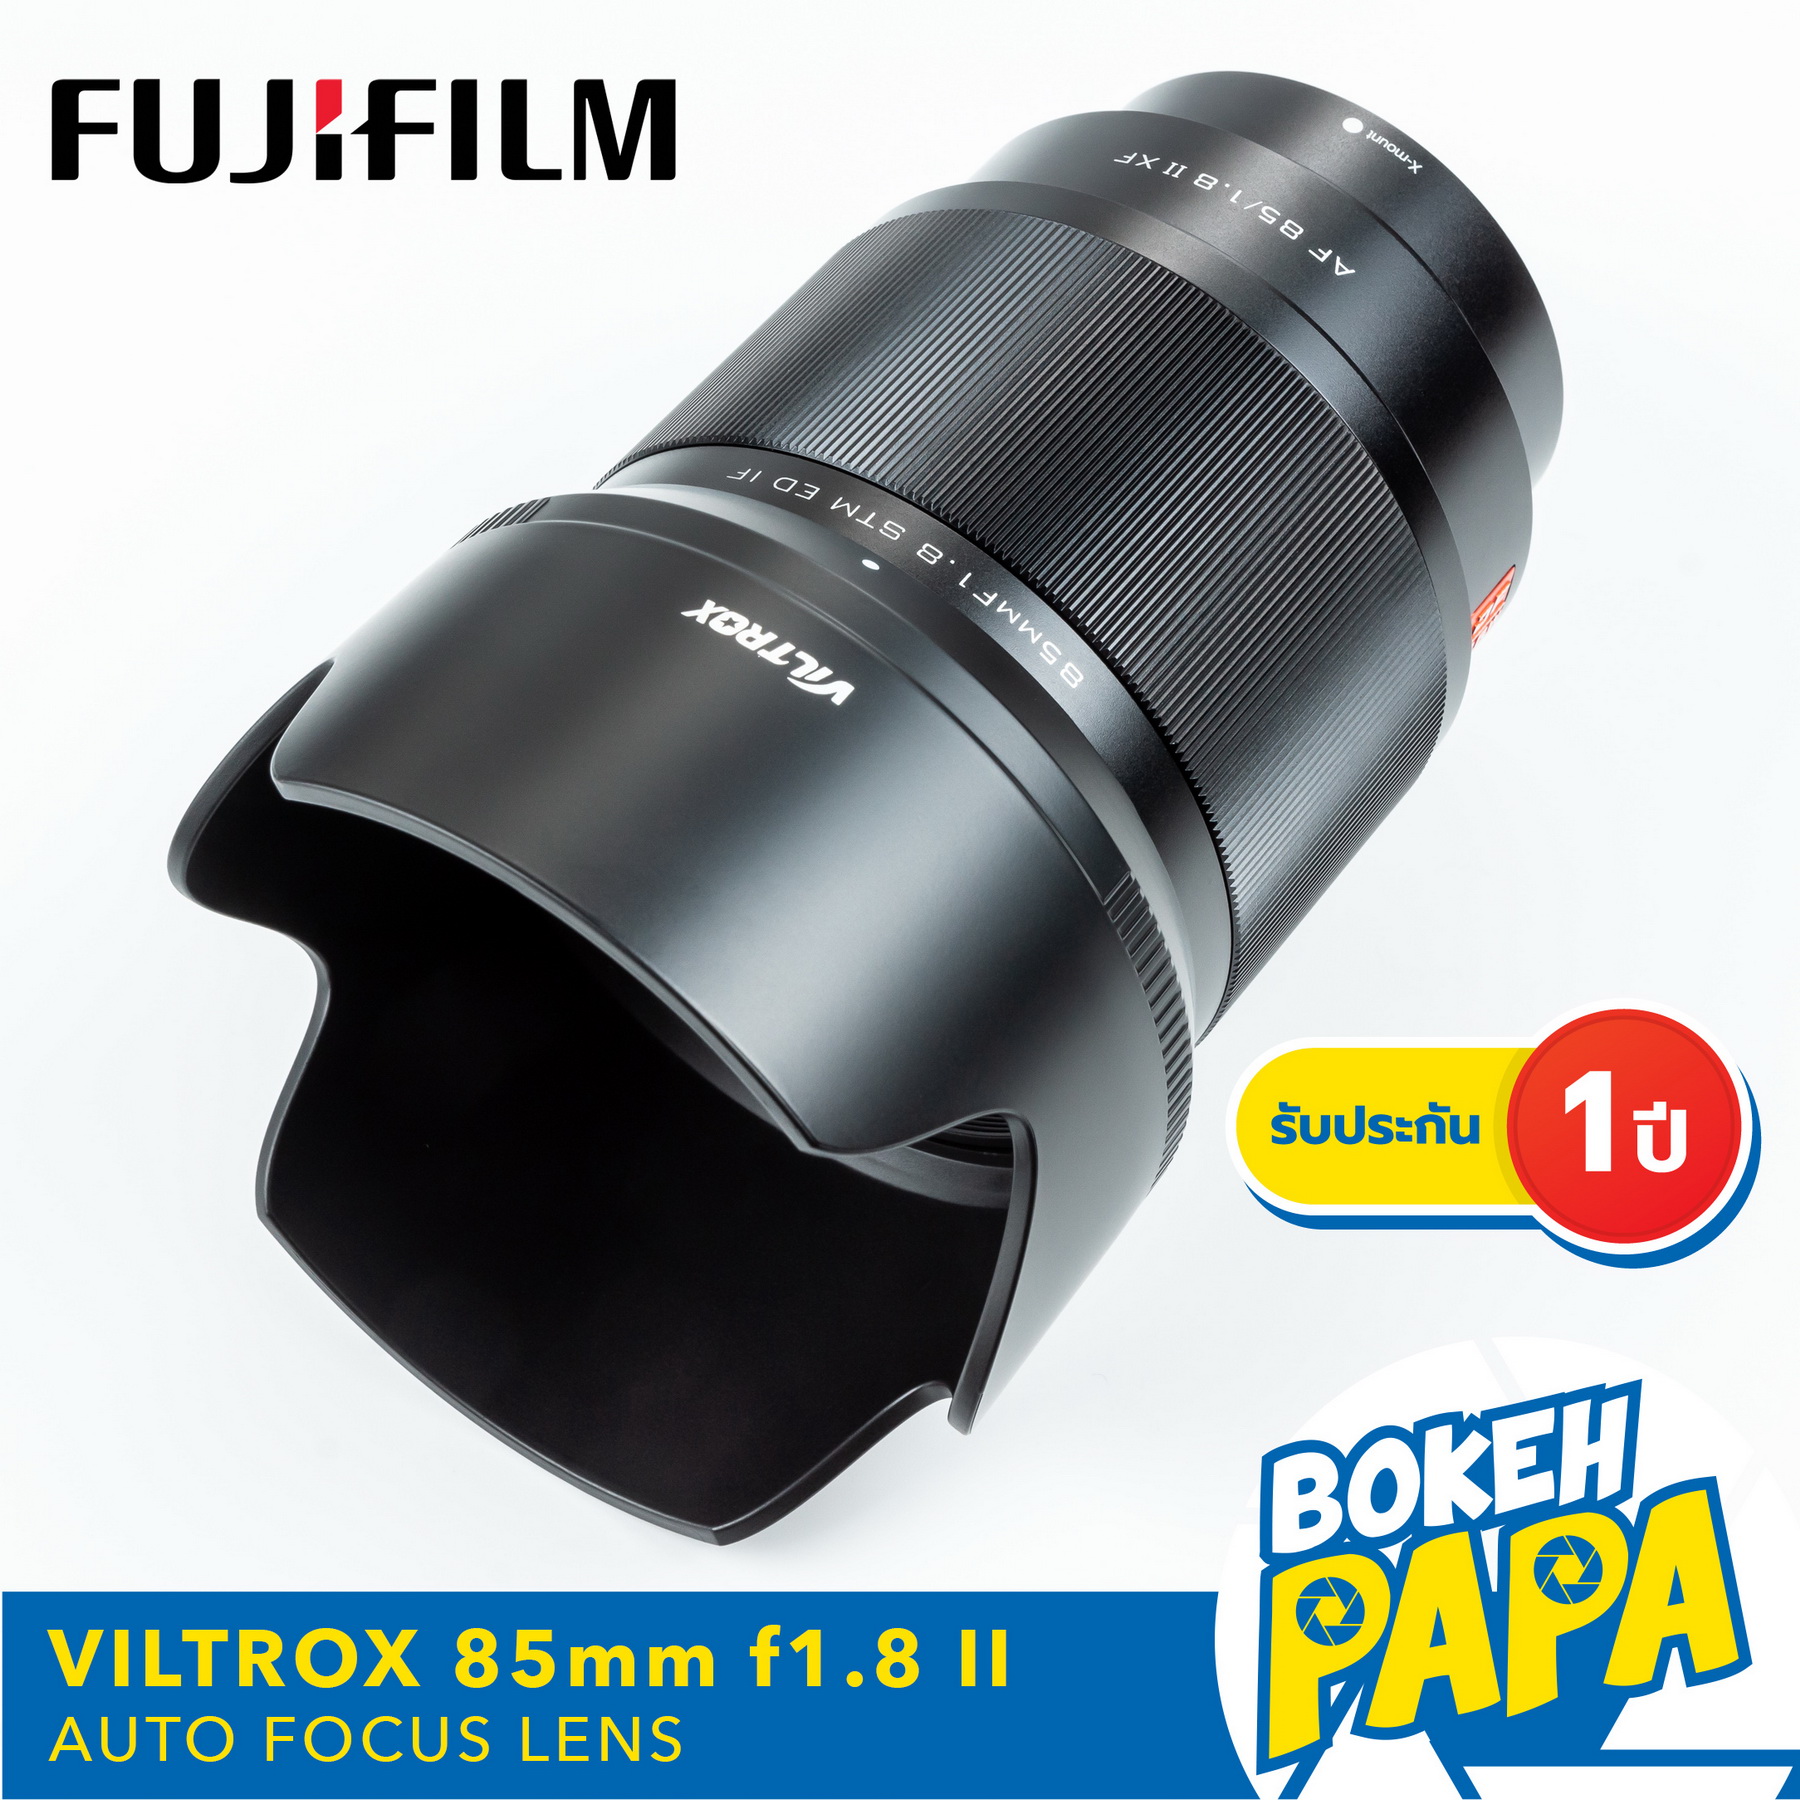 VILTROX 85mm F1.8 II MK2 STM FUJI FX Full frame เลนส์ ออโต้โฟกัส AF สำหรับใส่กล้อง Fuji Mirrorless ได้ทุกรุ่น ( VILTROX AUTO FOCUS Lens 85 MM F1.8 ) ( เมาท์ X Mount ) ( เลนส์ ฟลูเฟรม )